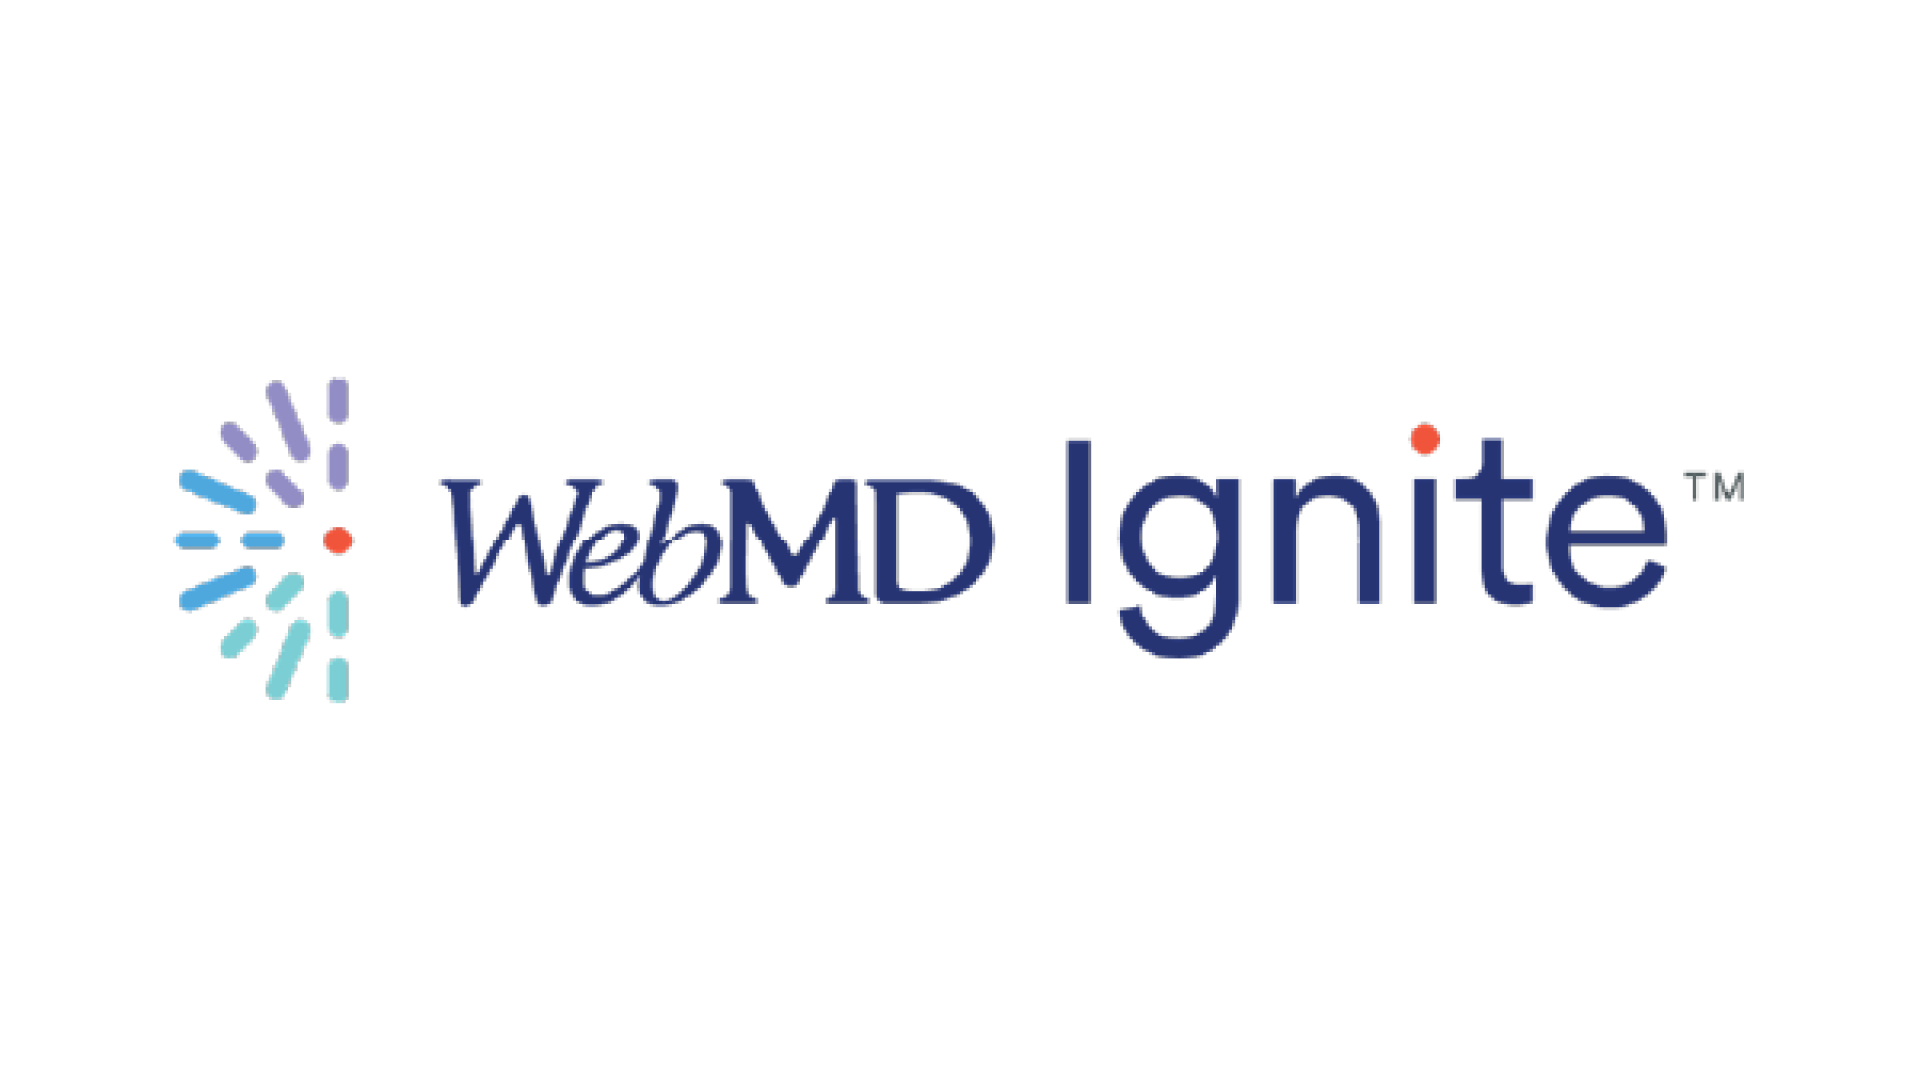 WebMD Ignite